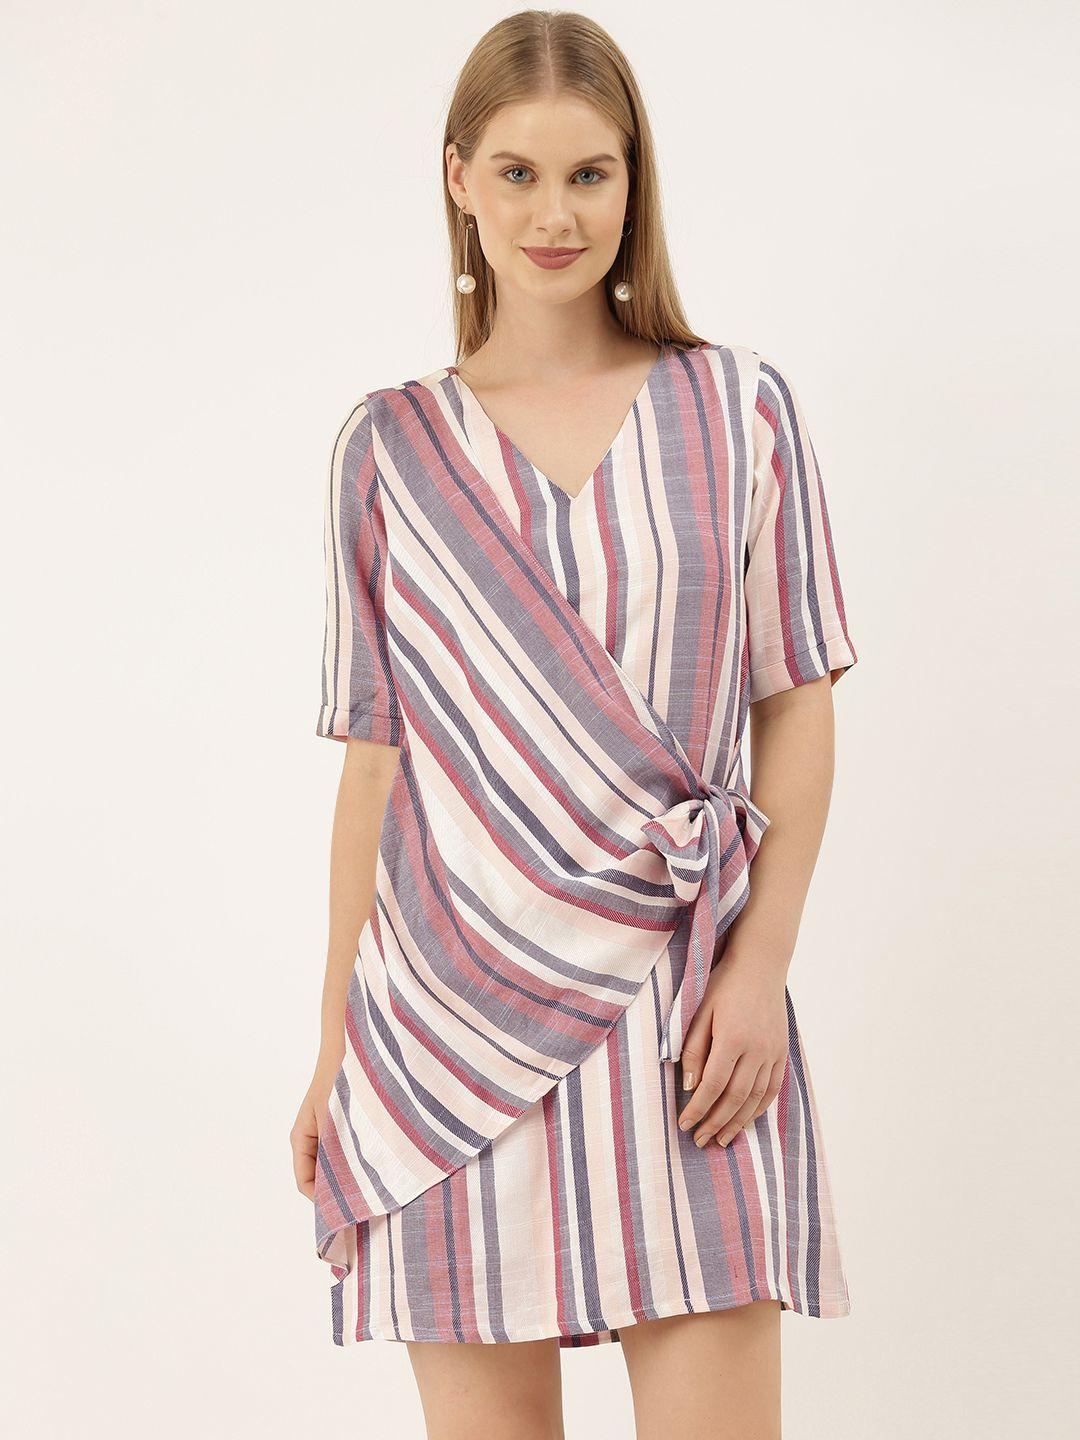 and-women-white-pink-&-blue-striped-wrap-dress